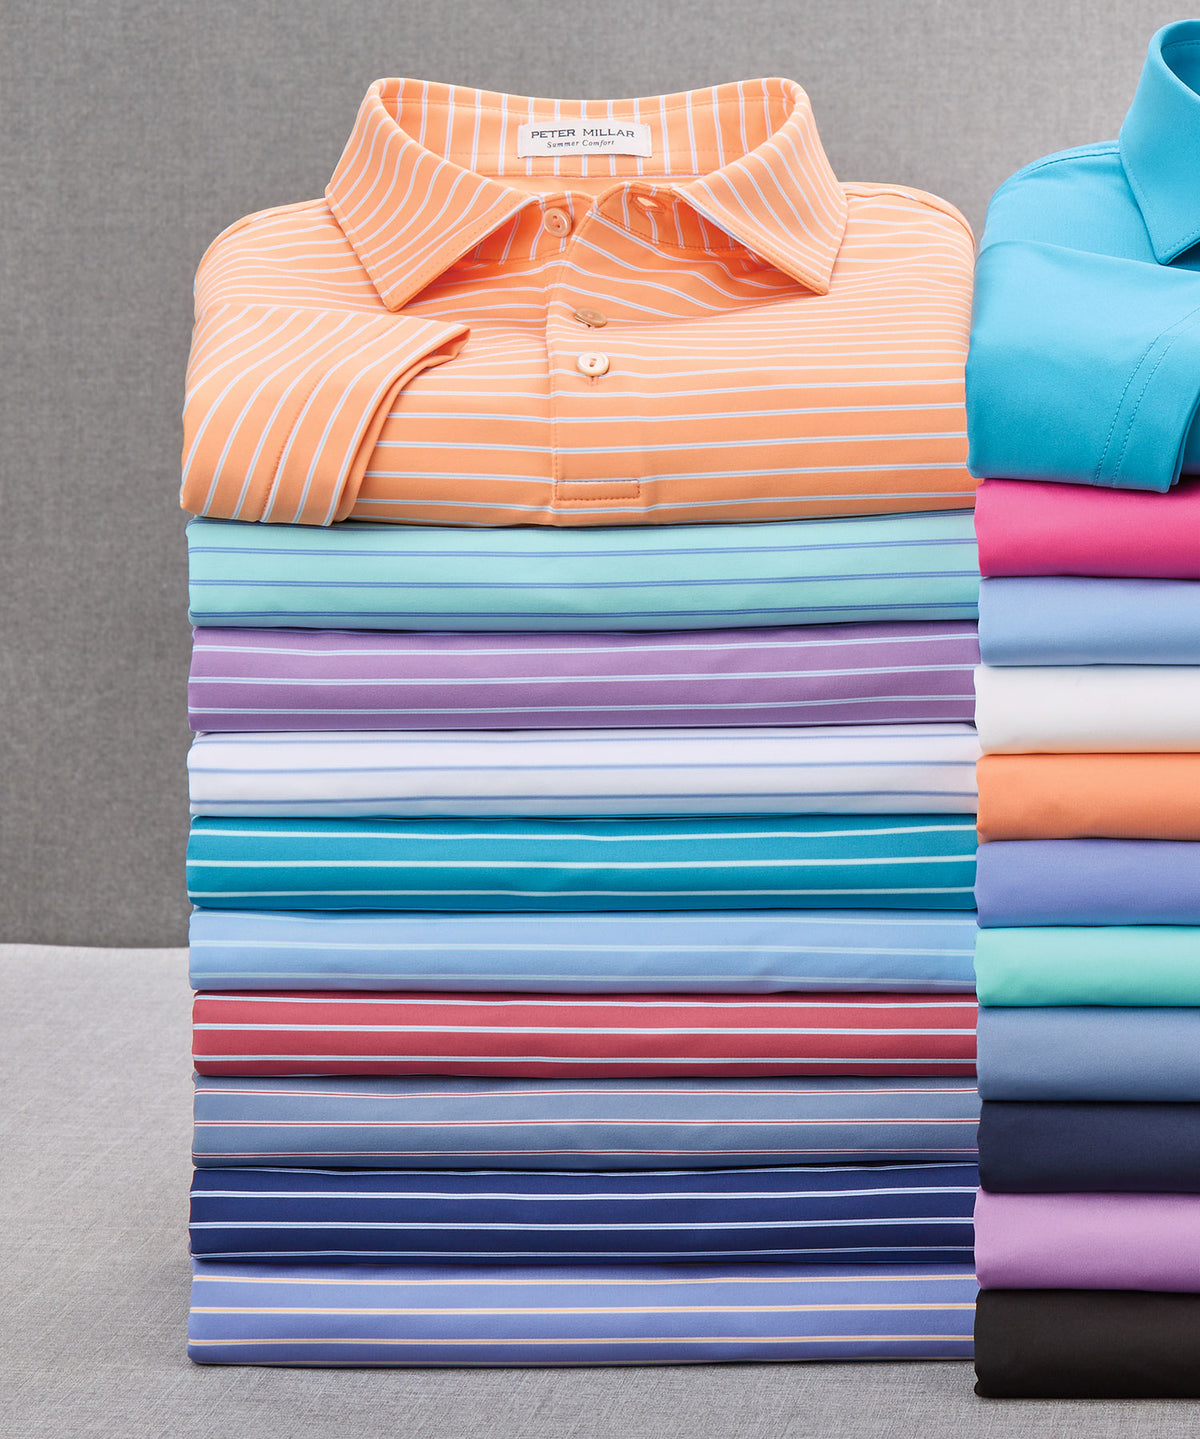 Peter Millar Short Sleeve Drum Stripe Polo Knit Shirt, Big & Tall